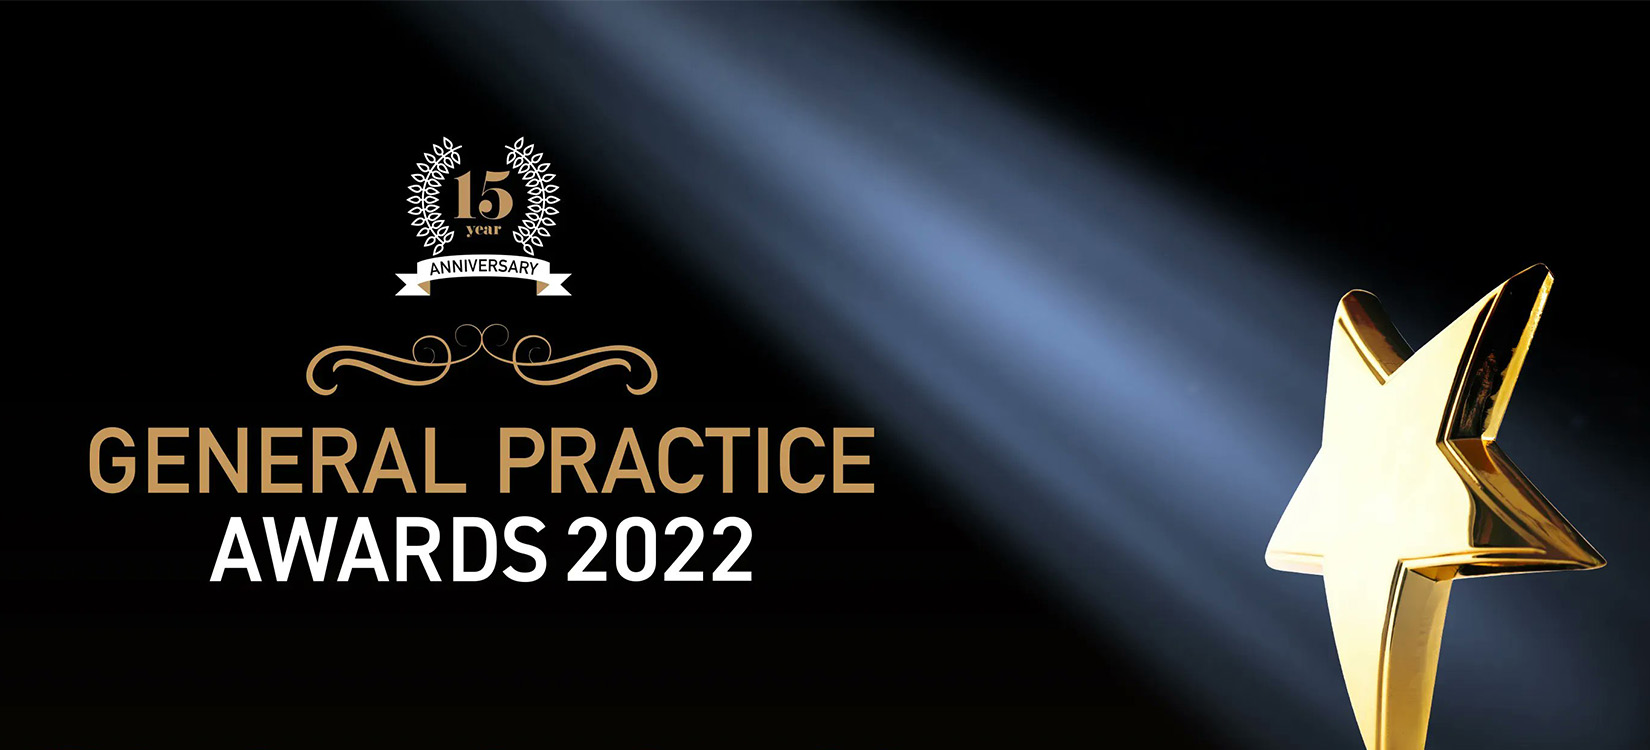 General Practice Awards 2022